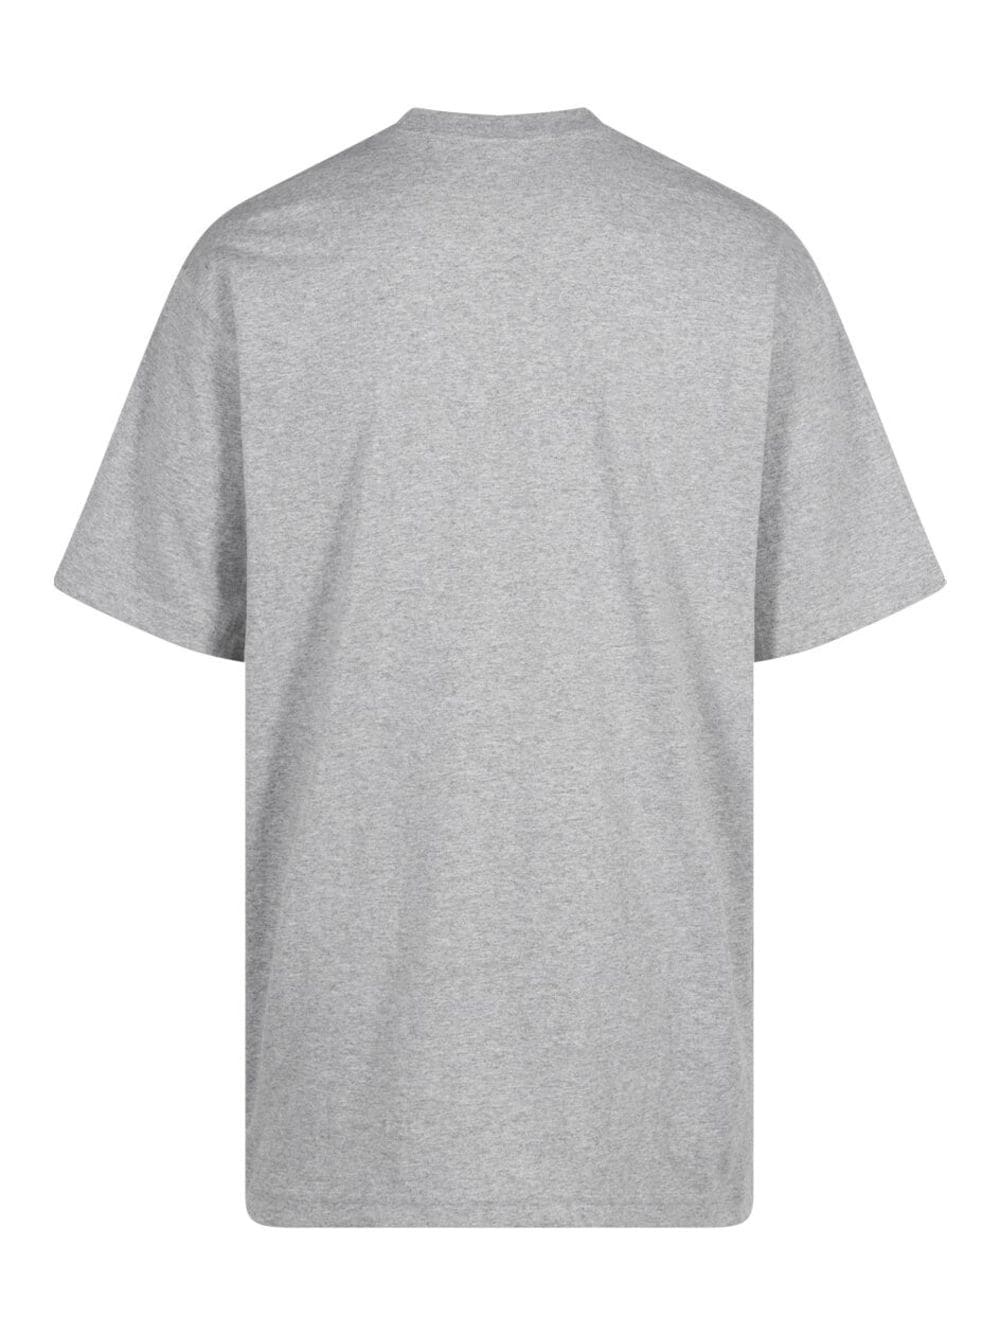 NBA Youngboy "FW23 Heather Grey" T-shirt - 2